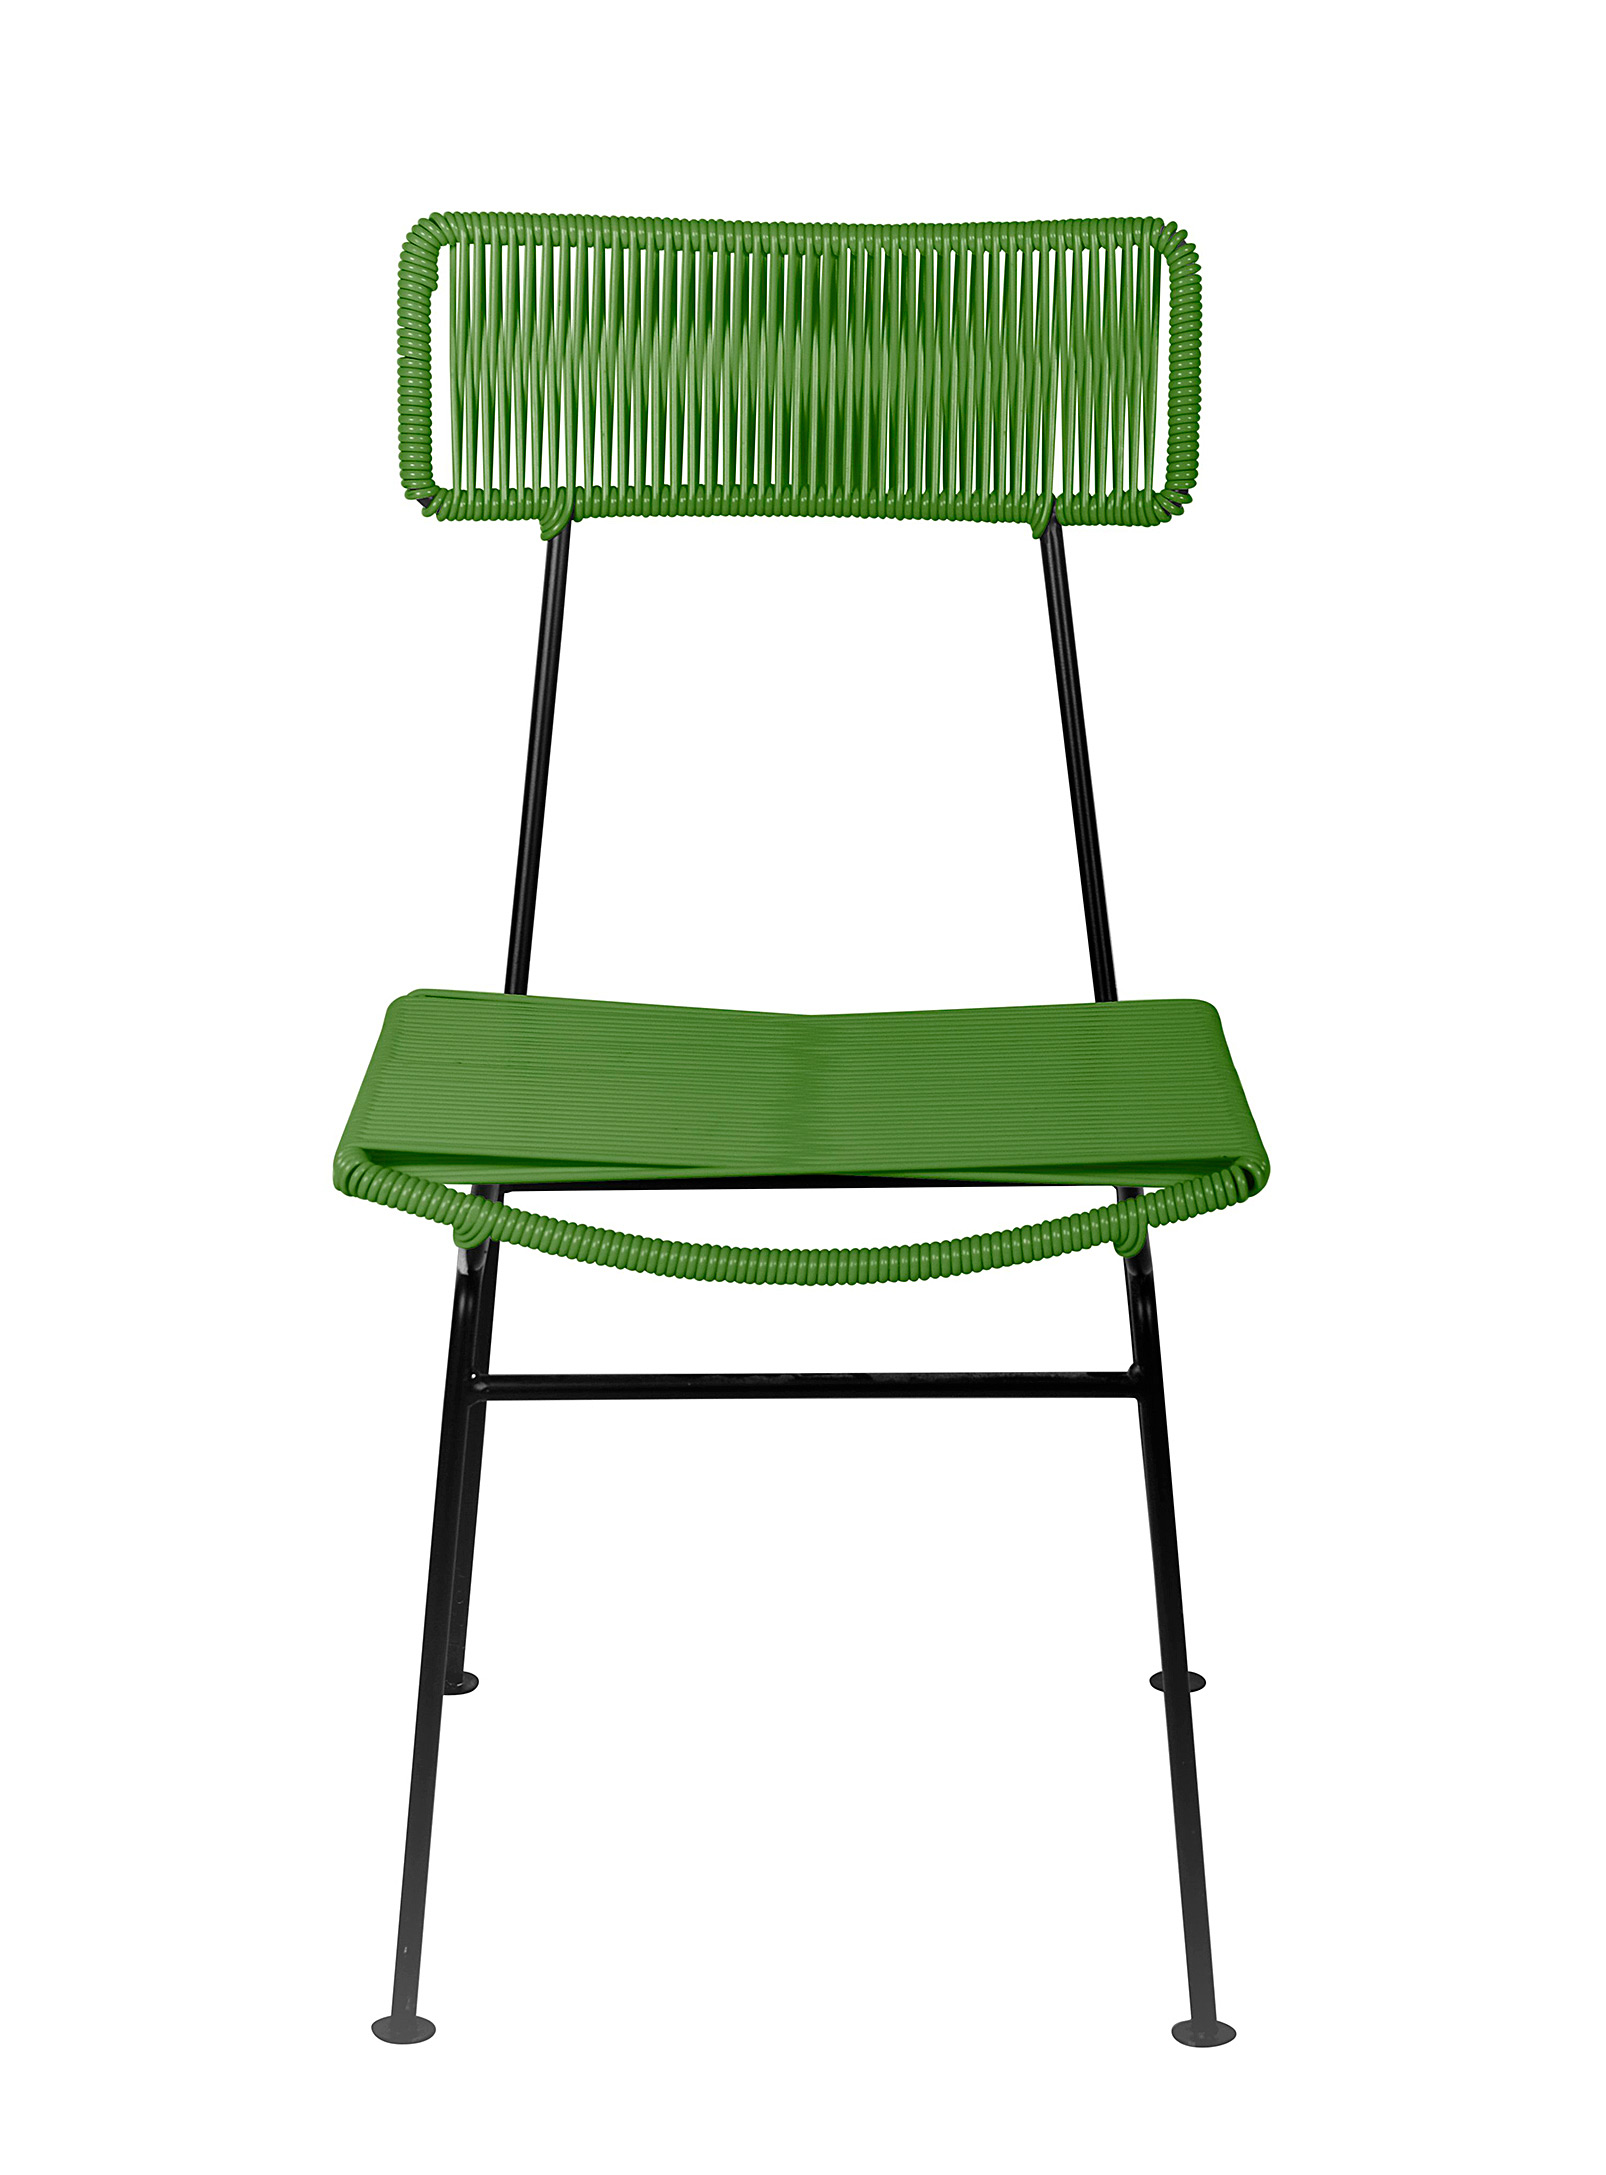 Simons Maison Hapi Outdoor Chair In Green